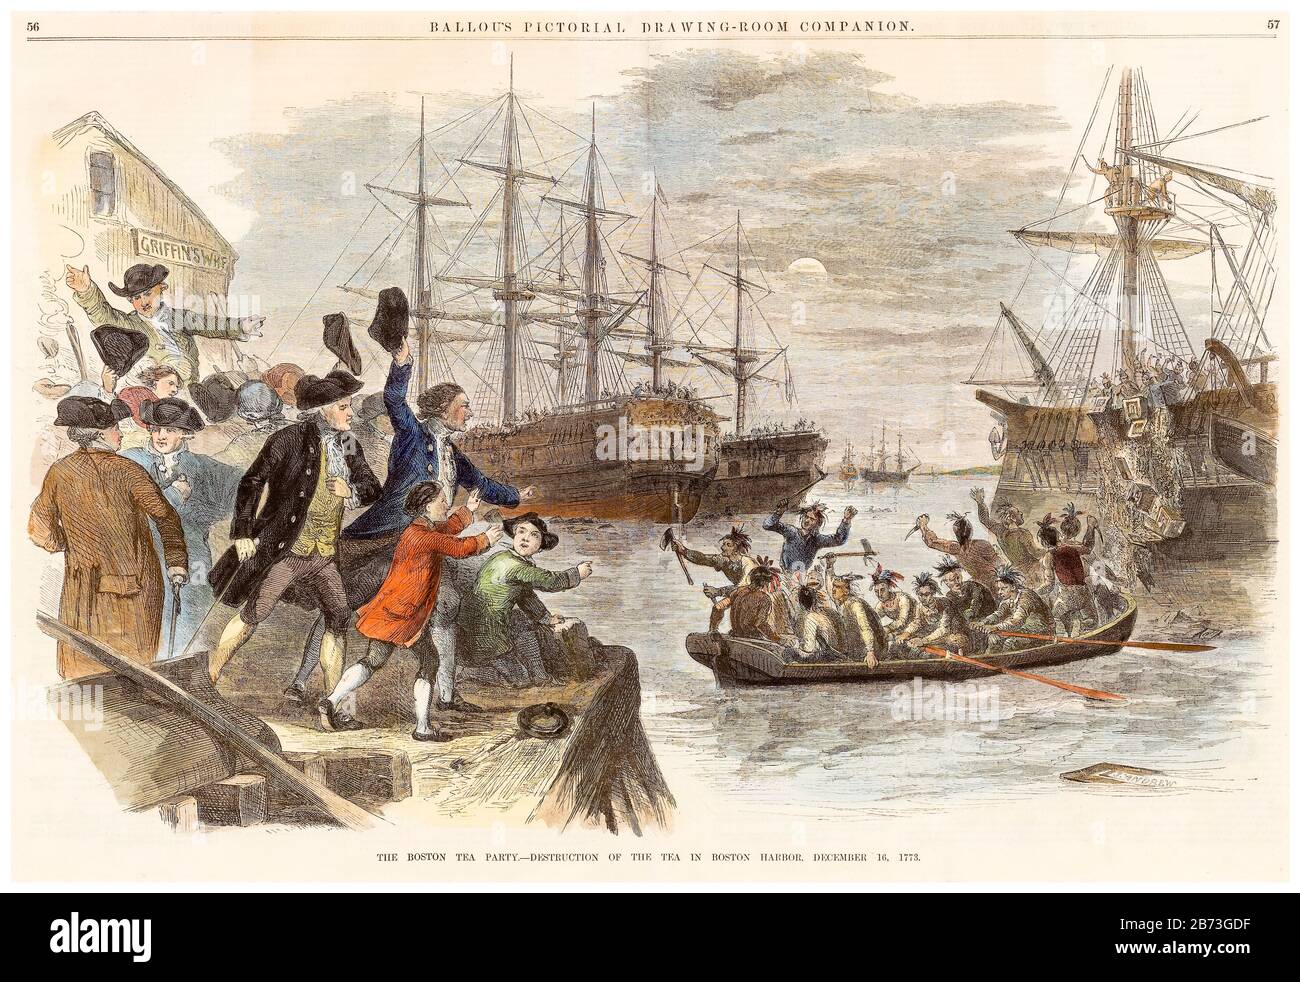 The Boston Tea Party, Destruction of the Tea in Boston Harbor, December  16th 1773, 19th Century engraving illustration by John Andrew, 1856 Stock  Photo - Alamy